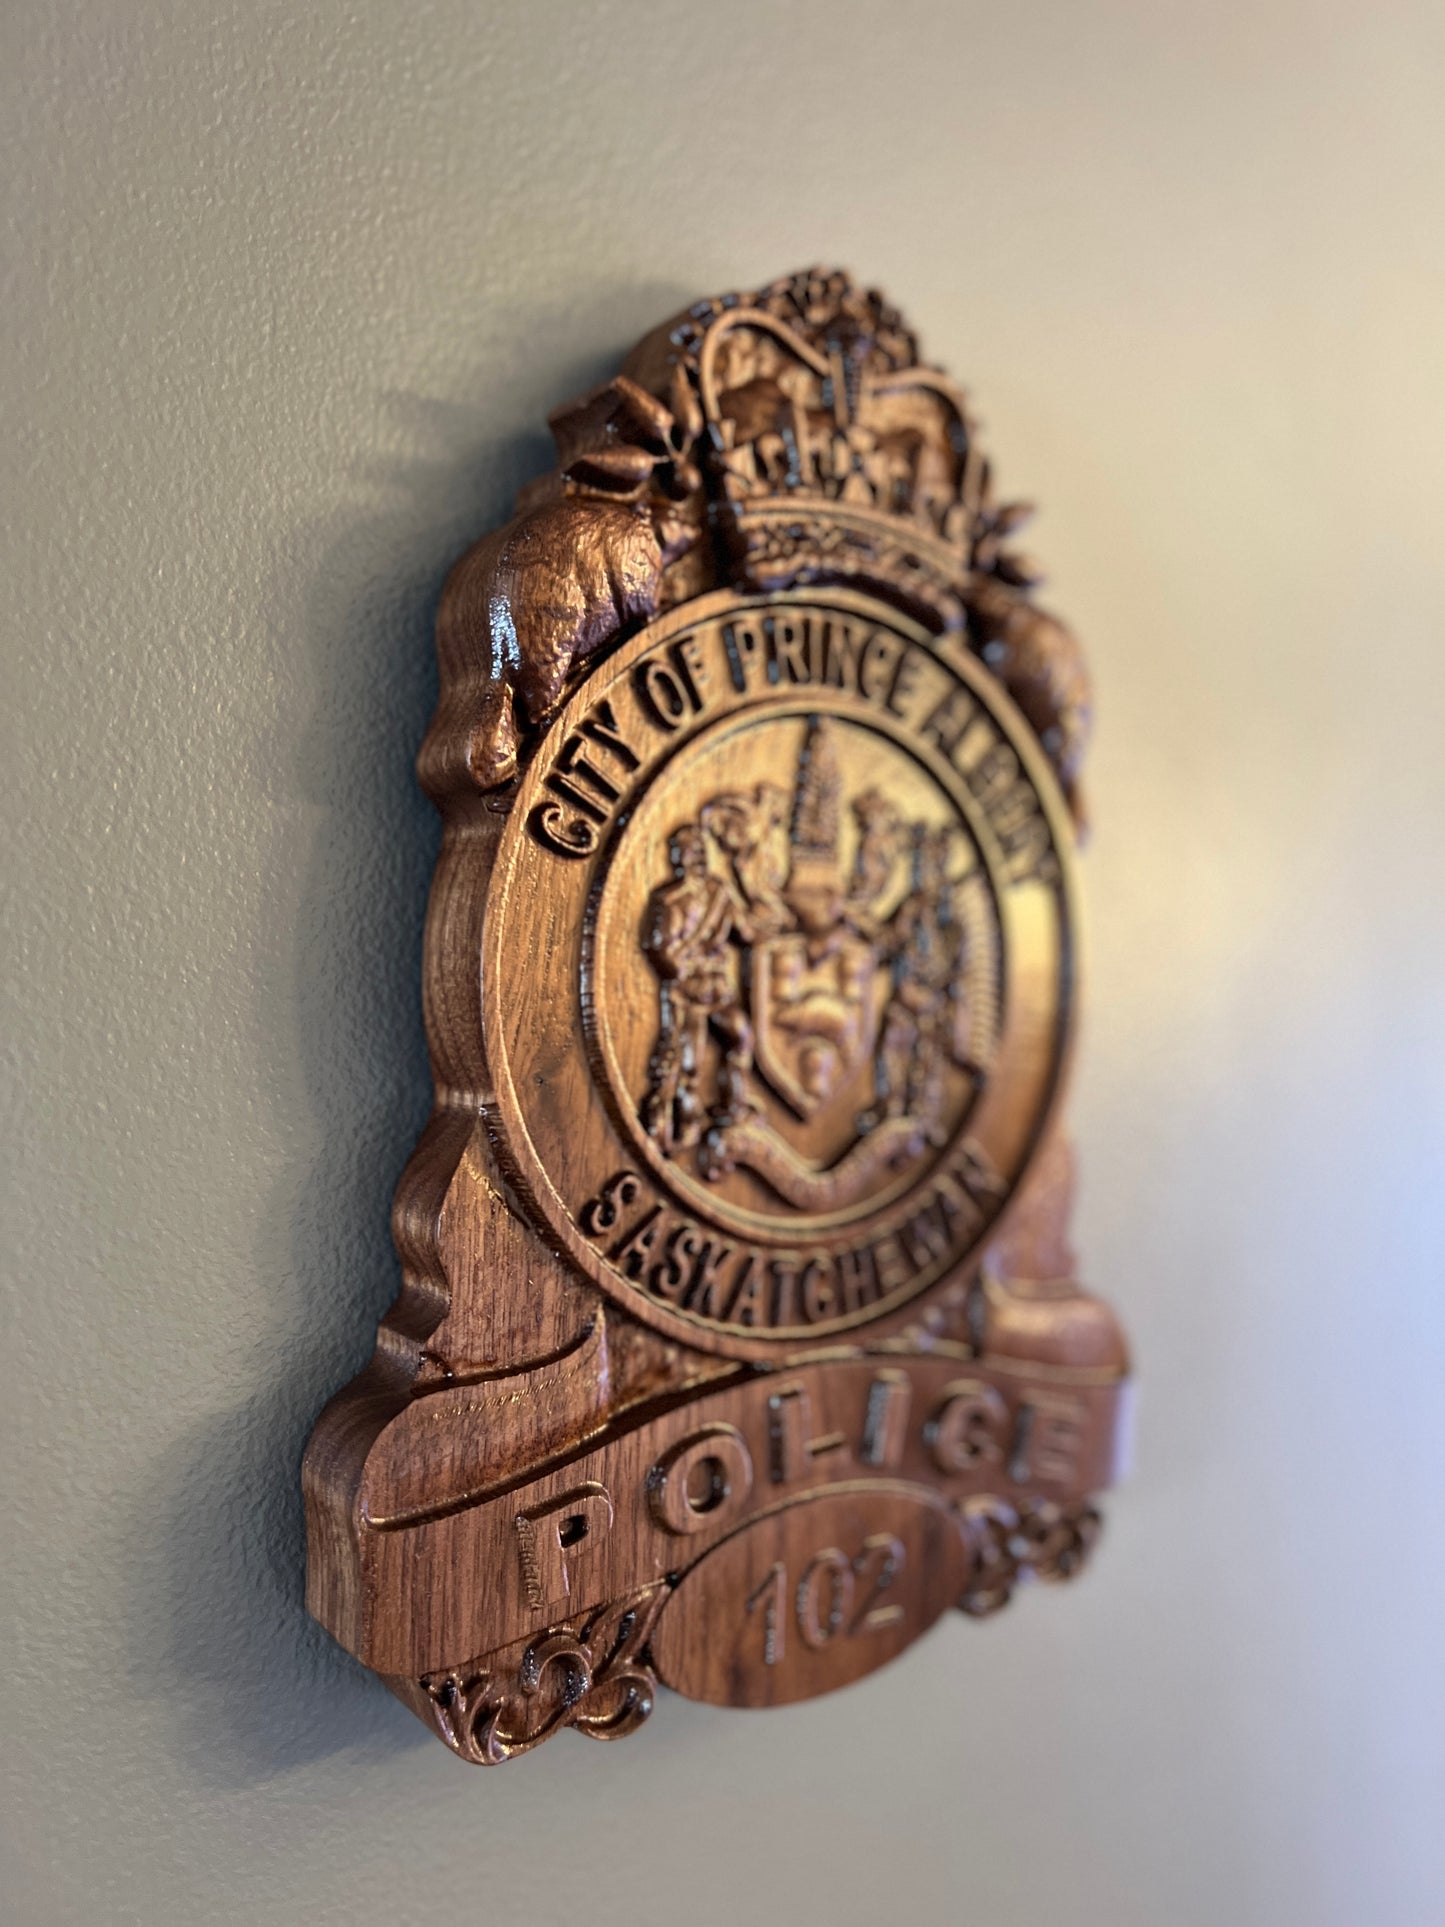 Prince Albert Police Wooden Badge